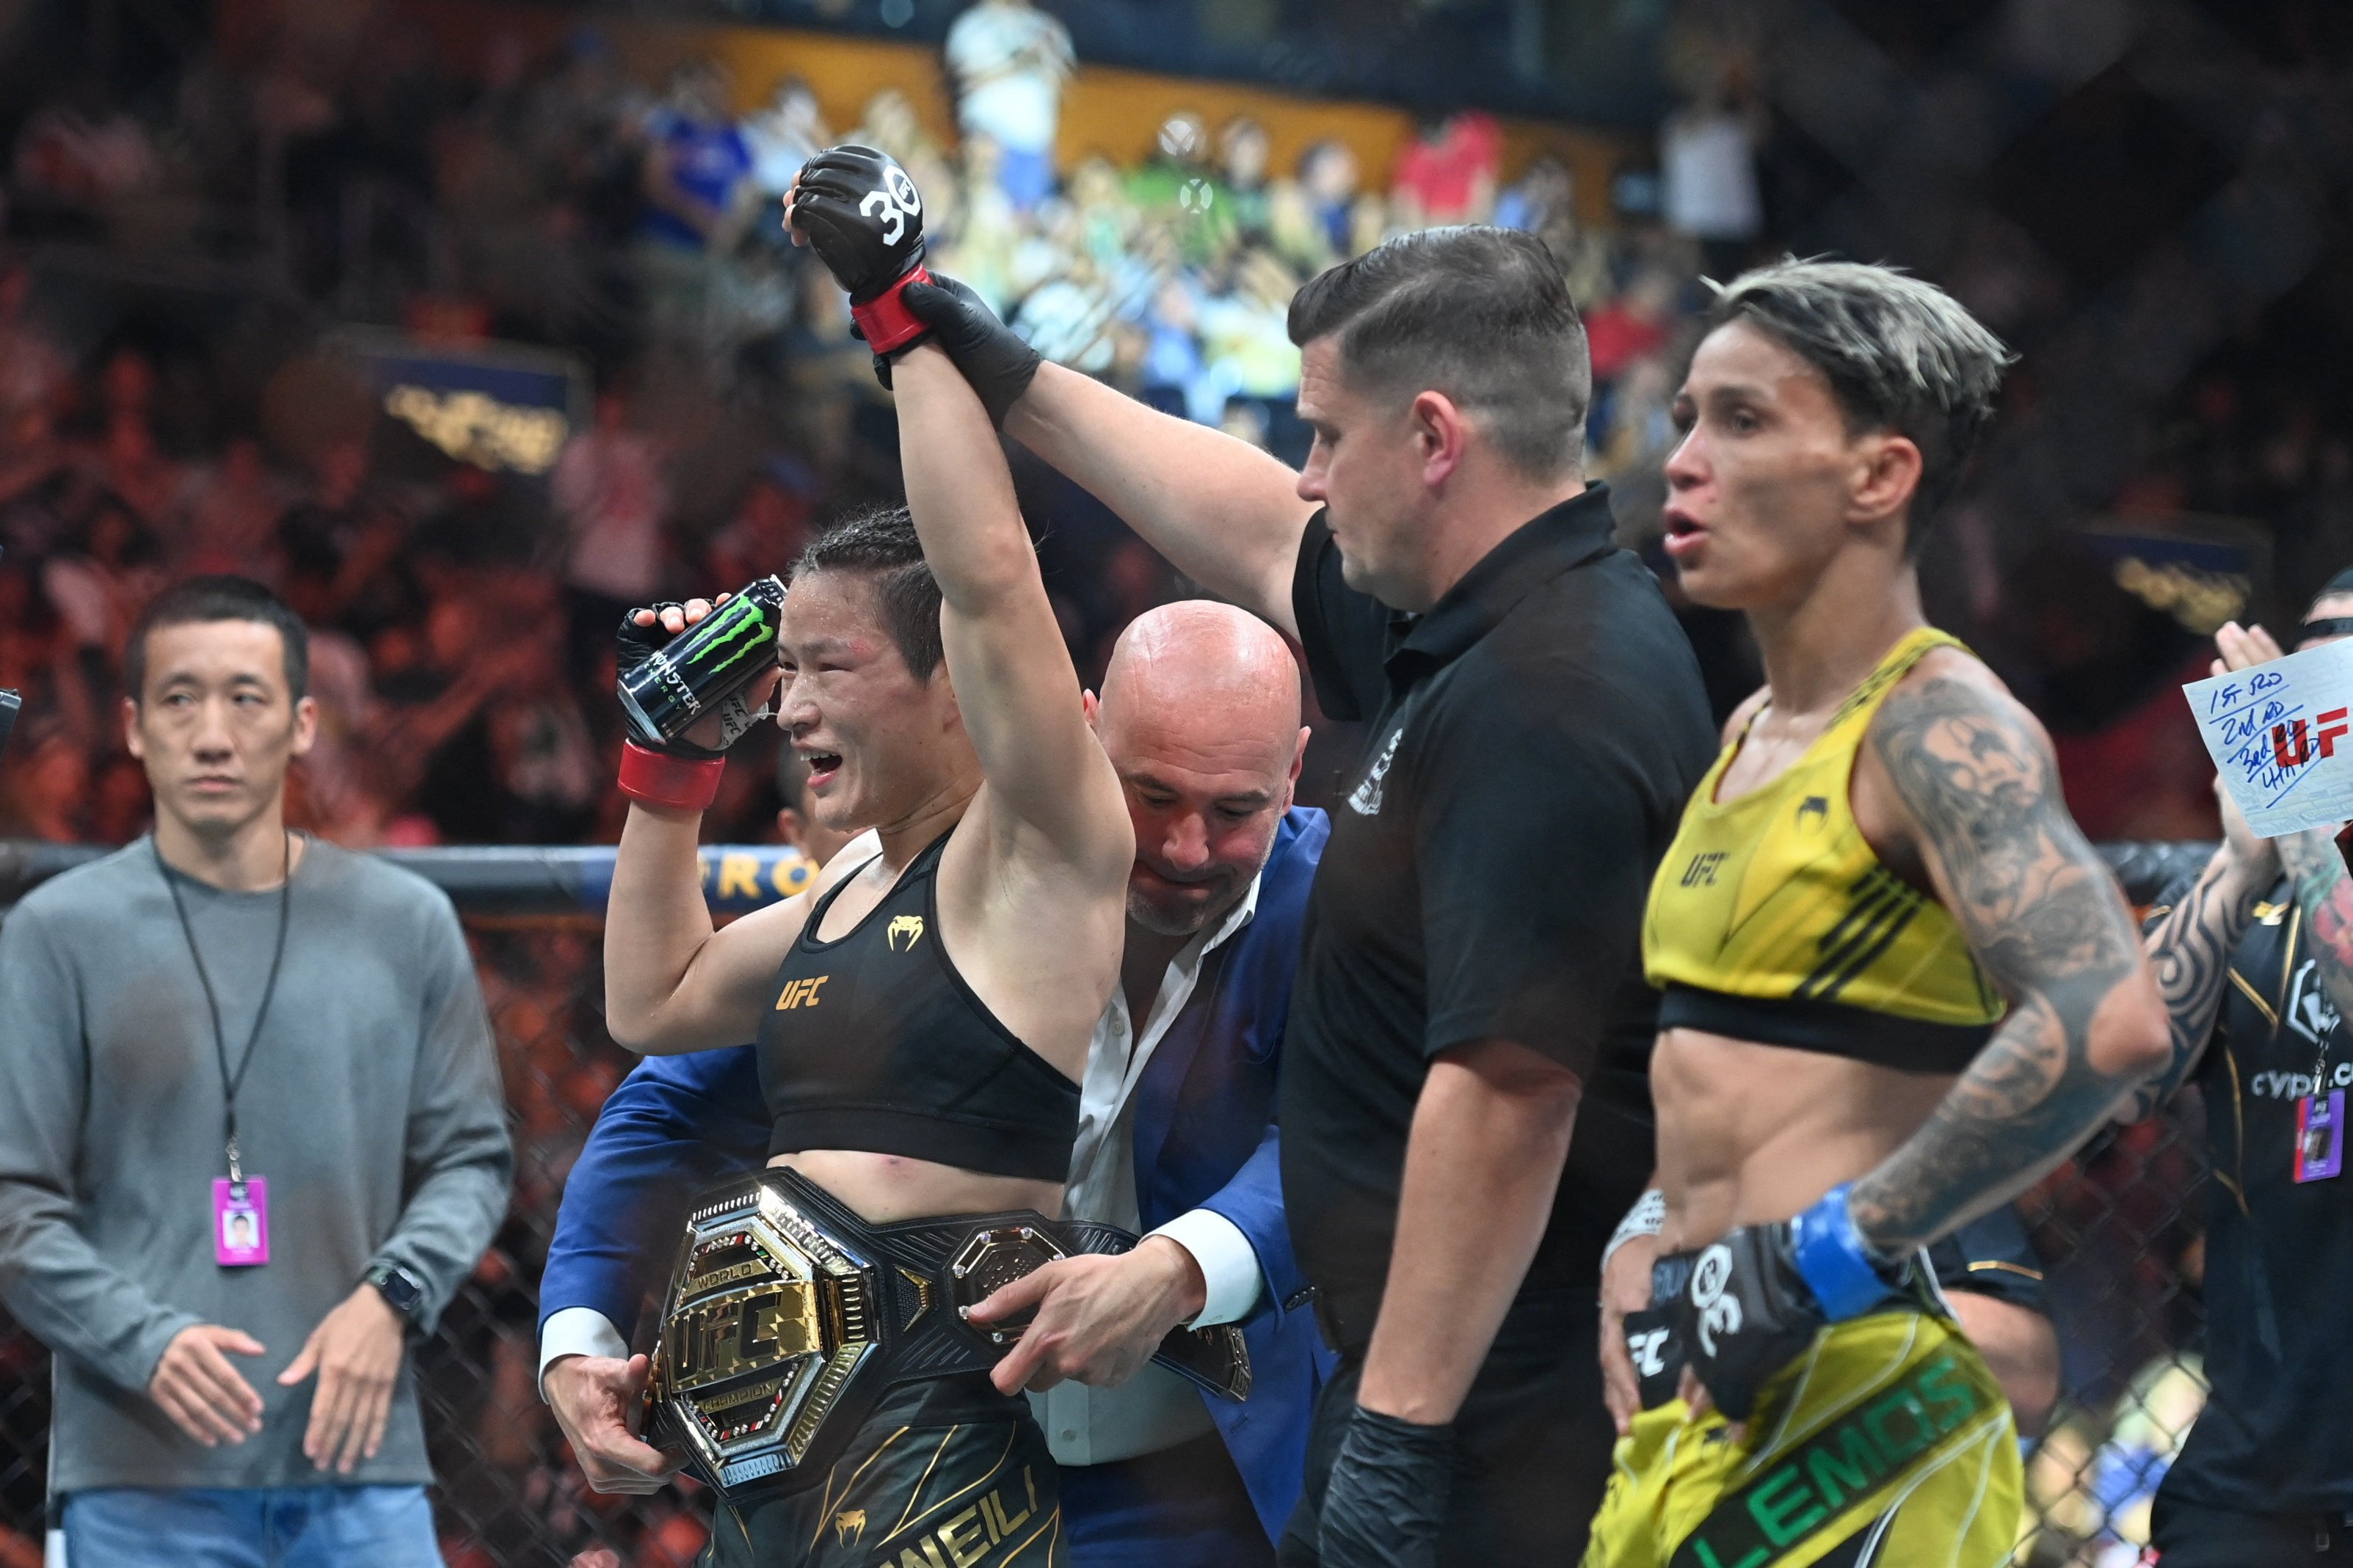 Dana White wraps the UFC strawweight title around Zhang Weili’s waist at UFC 292 in Boston. Photo: USA TODAY Sports